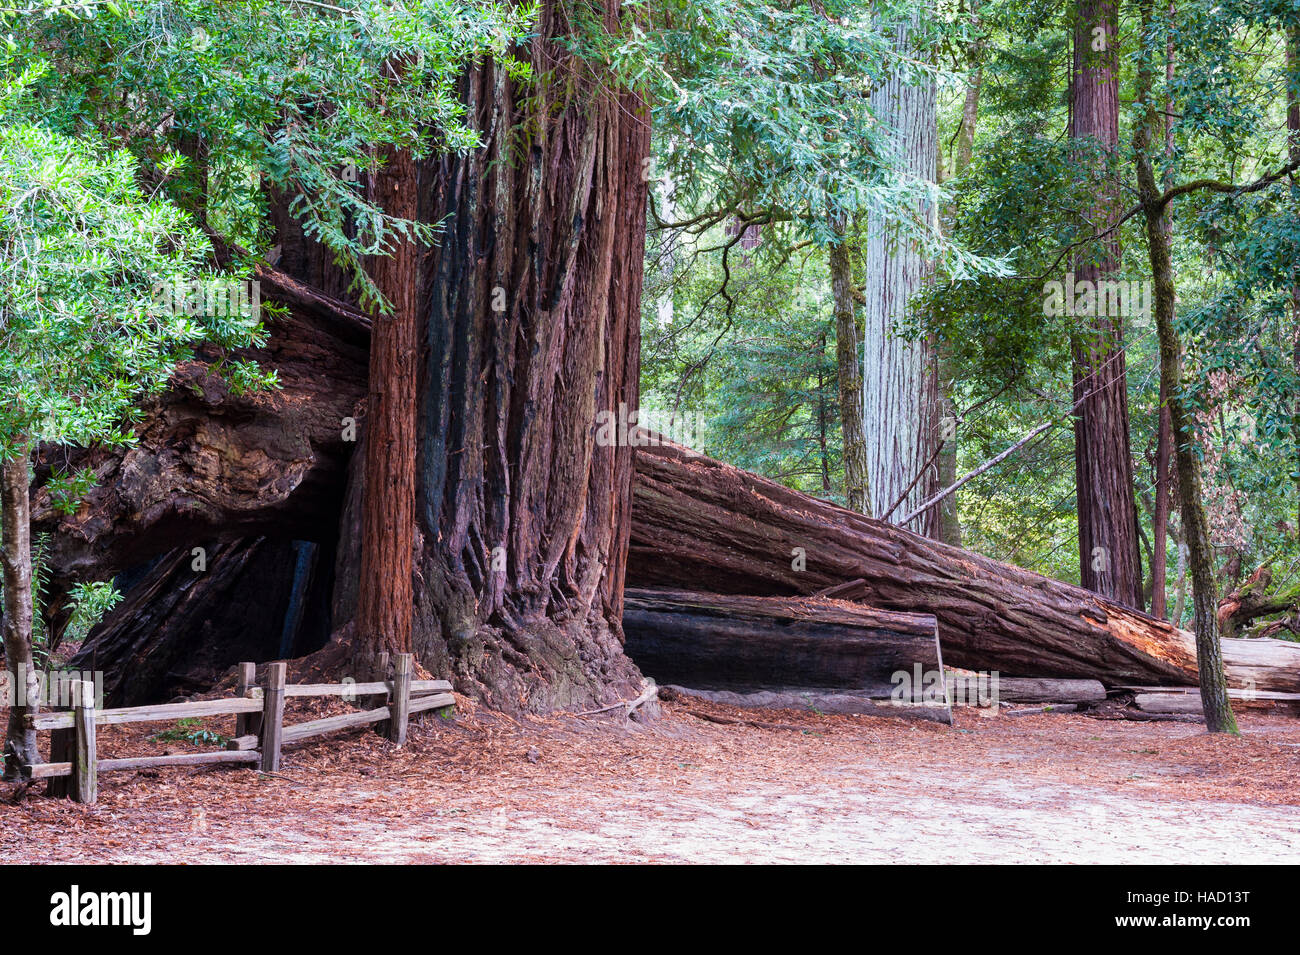 Giant sequoia, coast redwood, coastal redwood, California redwood, Sequoia sempervirens, fallen tree on a trail, Big Basin Redwoods State Park, CA. Stock Photo